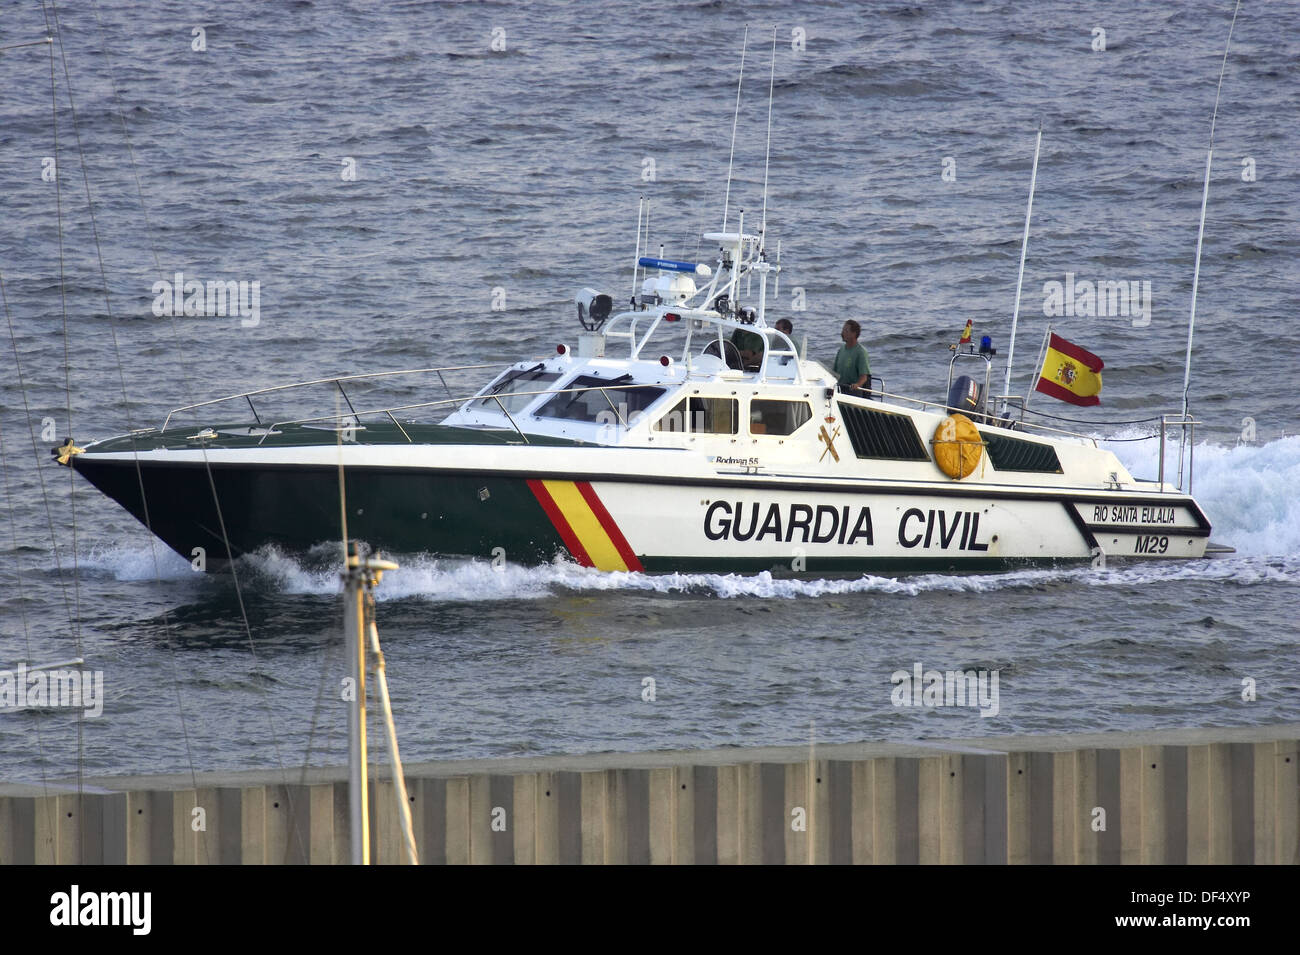 Civil Guard Patrol boat, Spain Stock Photo